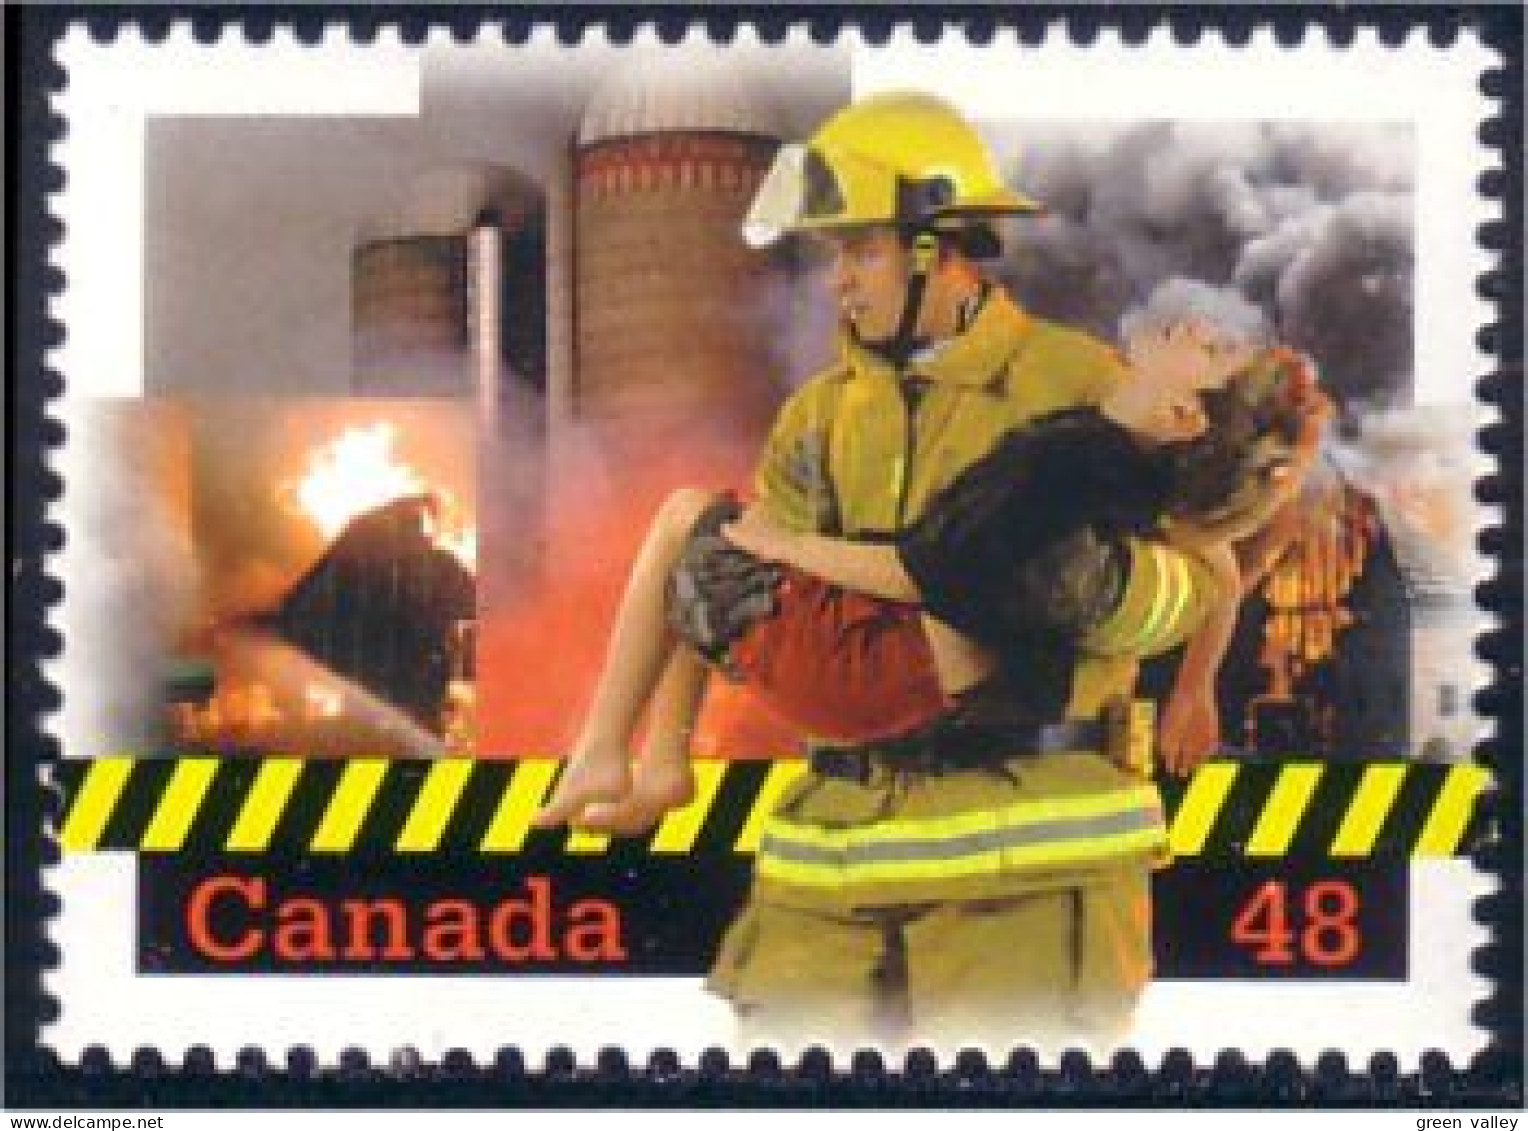 Canada Pompier Firefighter Sauvetage Save Life MNH ** Neuf SC (C19-86c) - Primo Soccorso